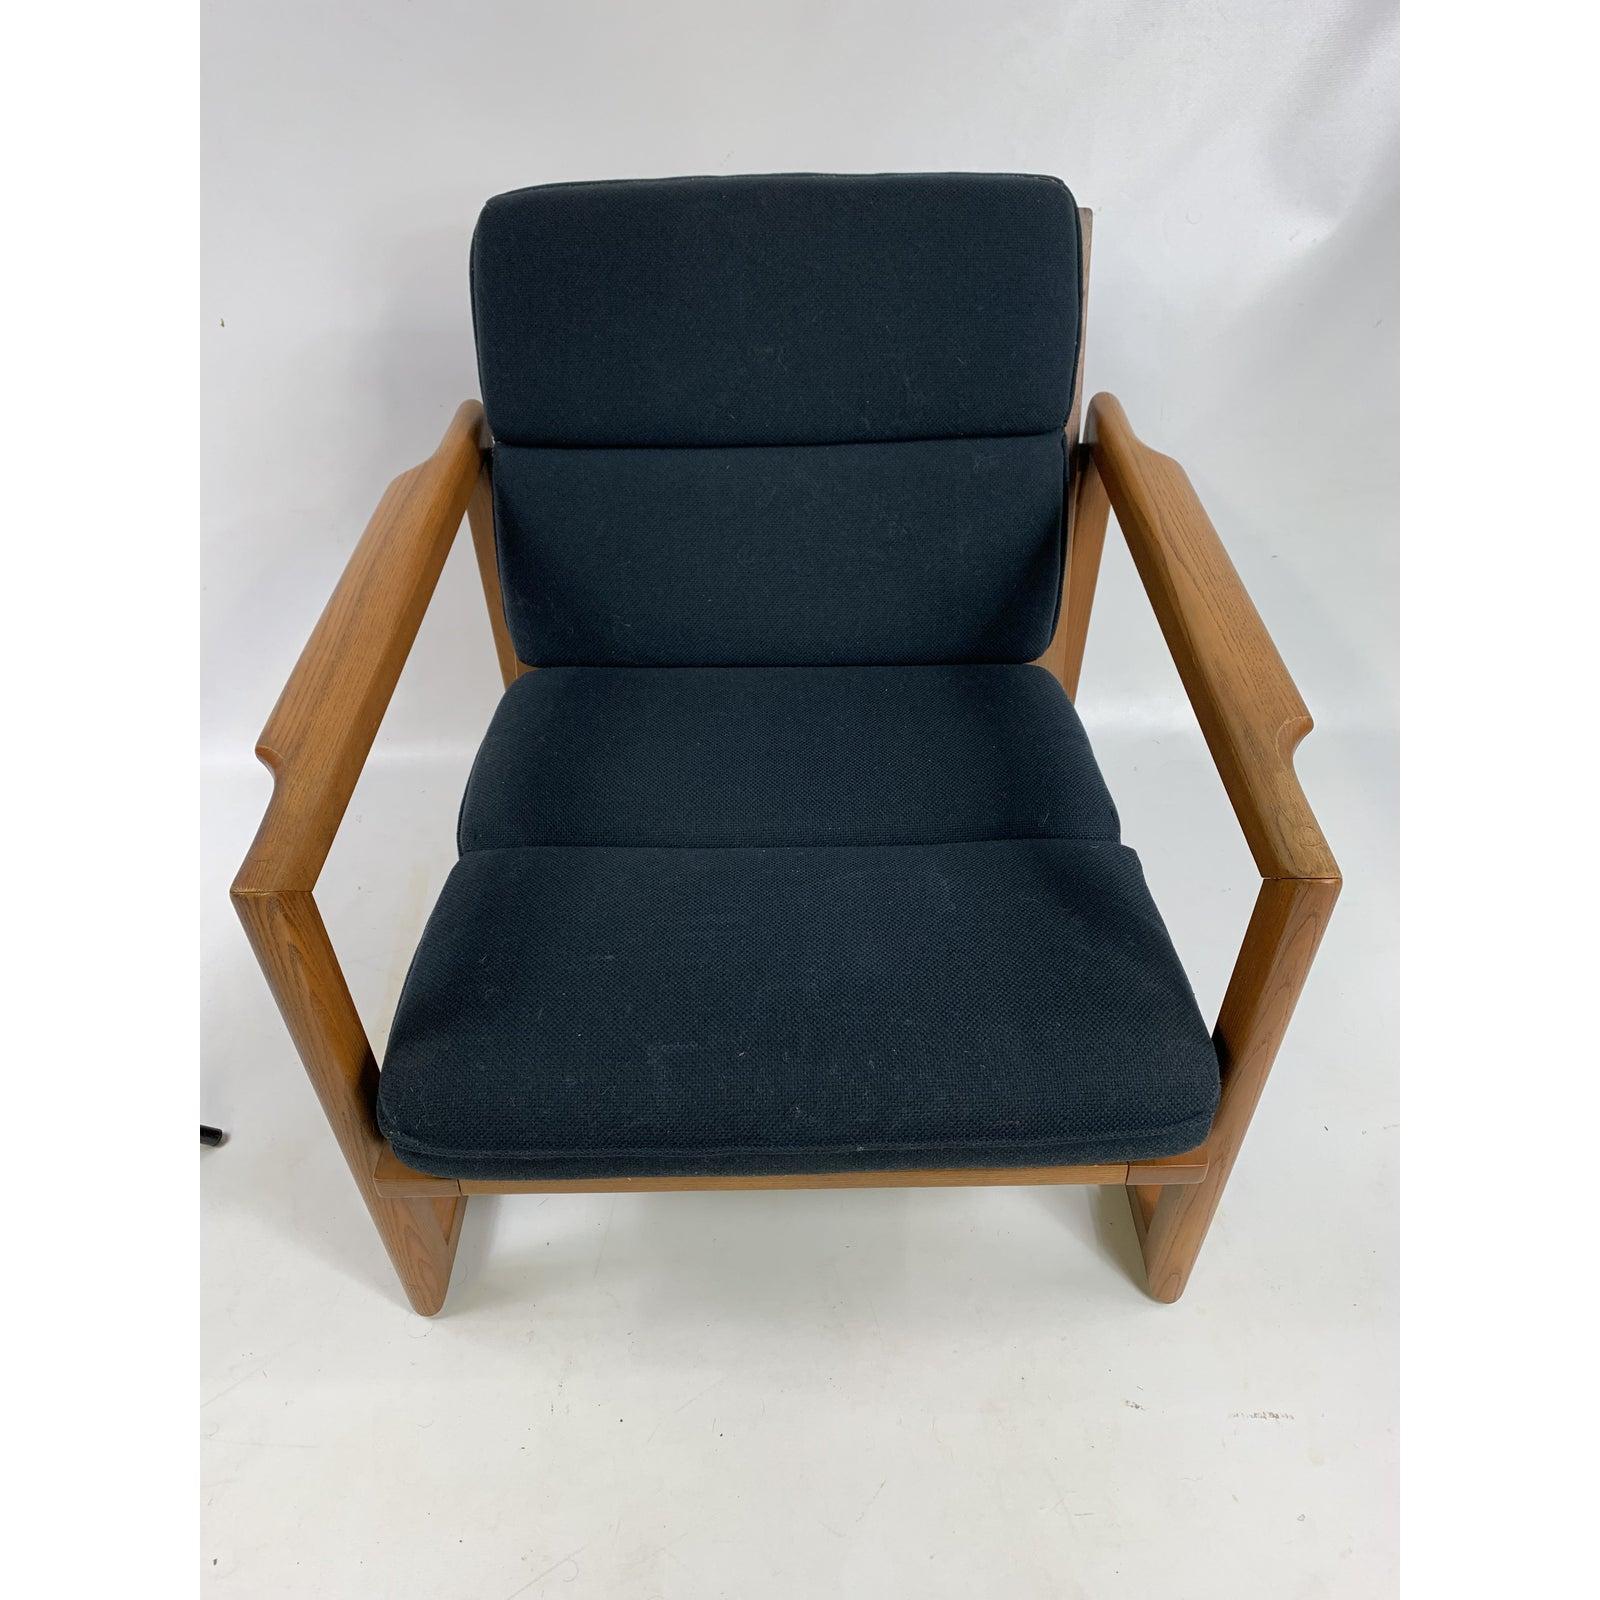 Very nice low sitting clean line solid walnut danish lounge chair.